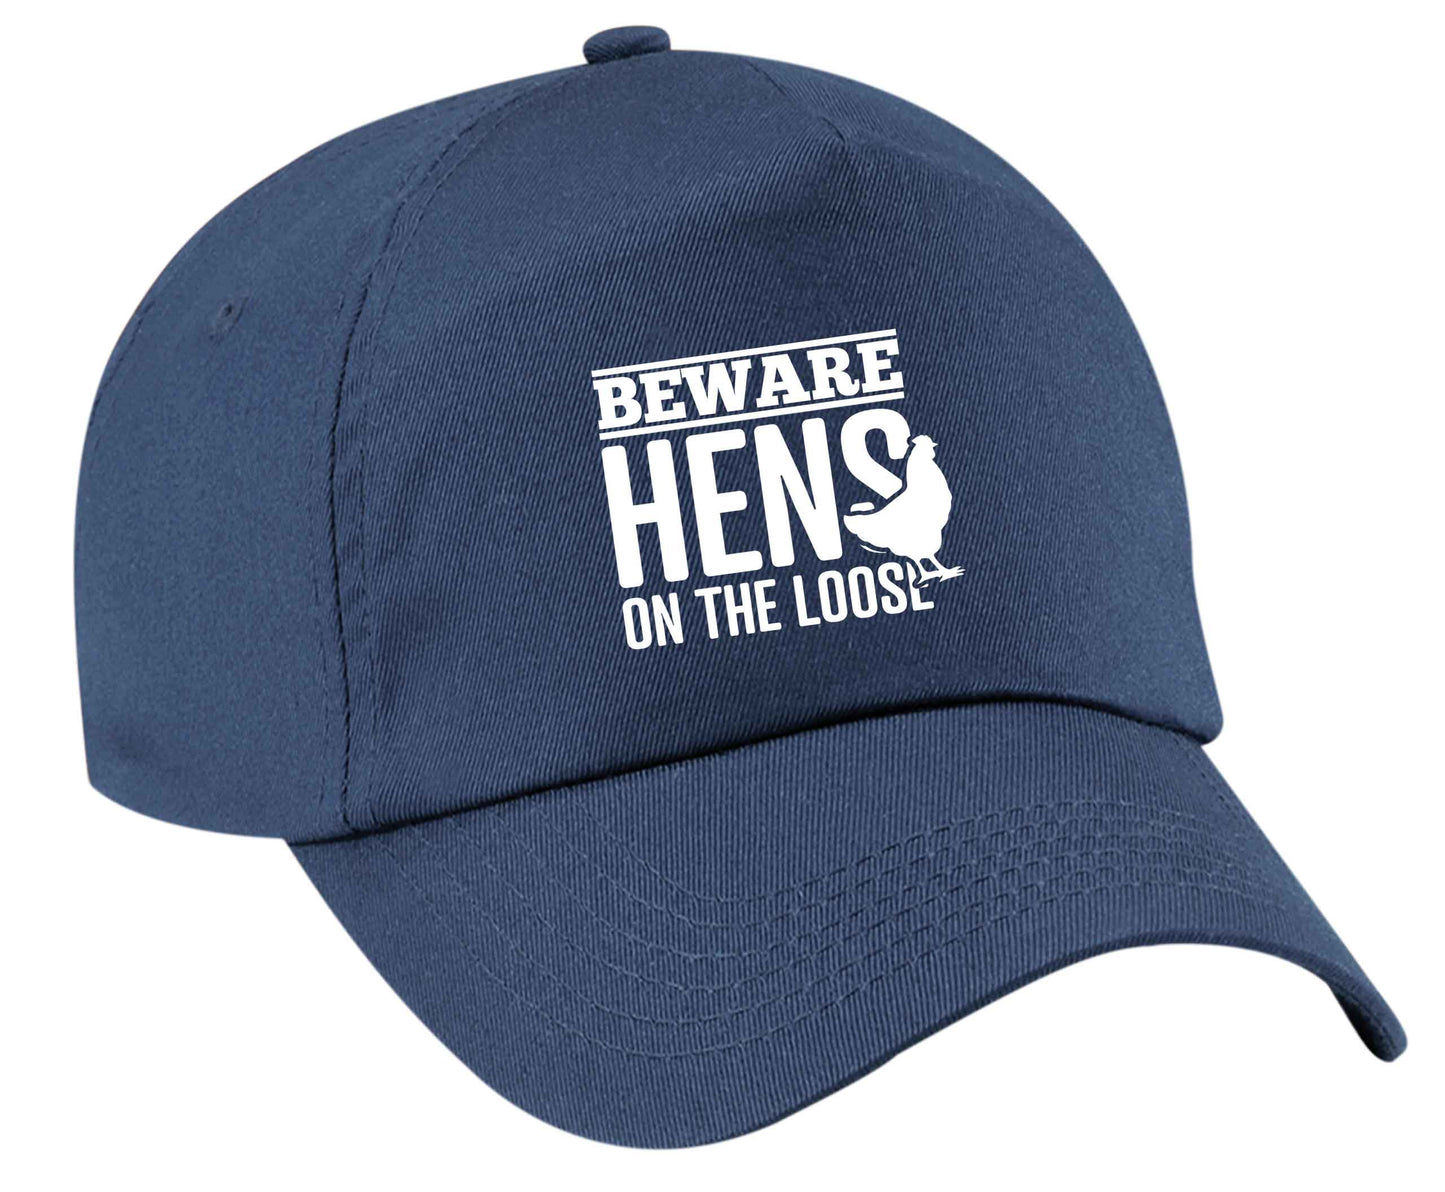 Beware hens on the loose baseball cap